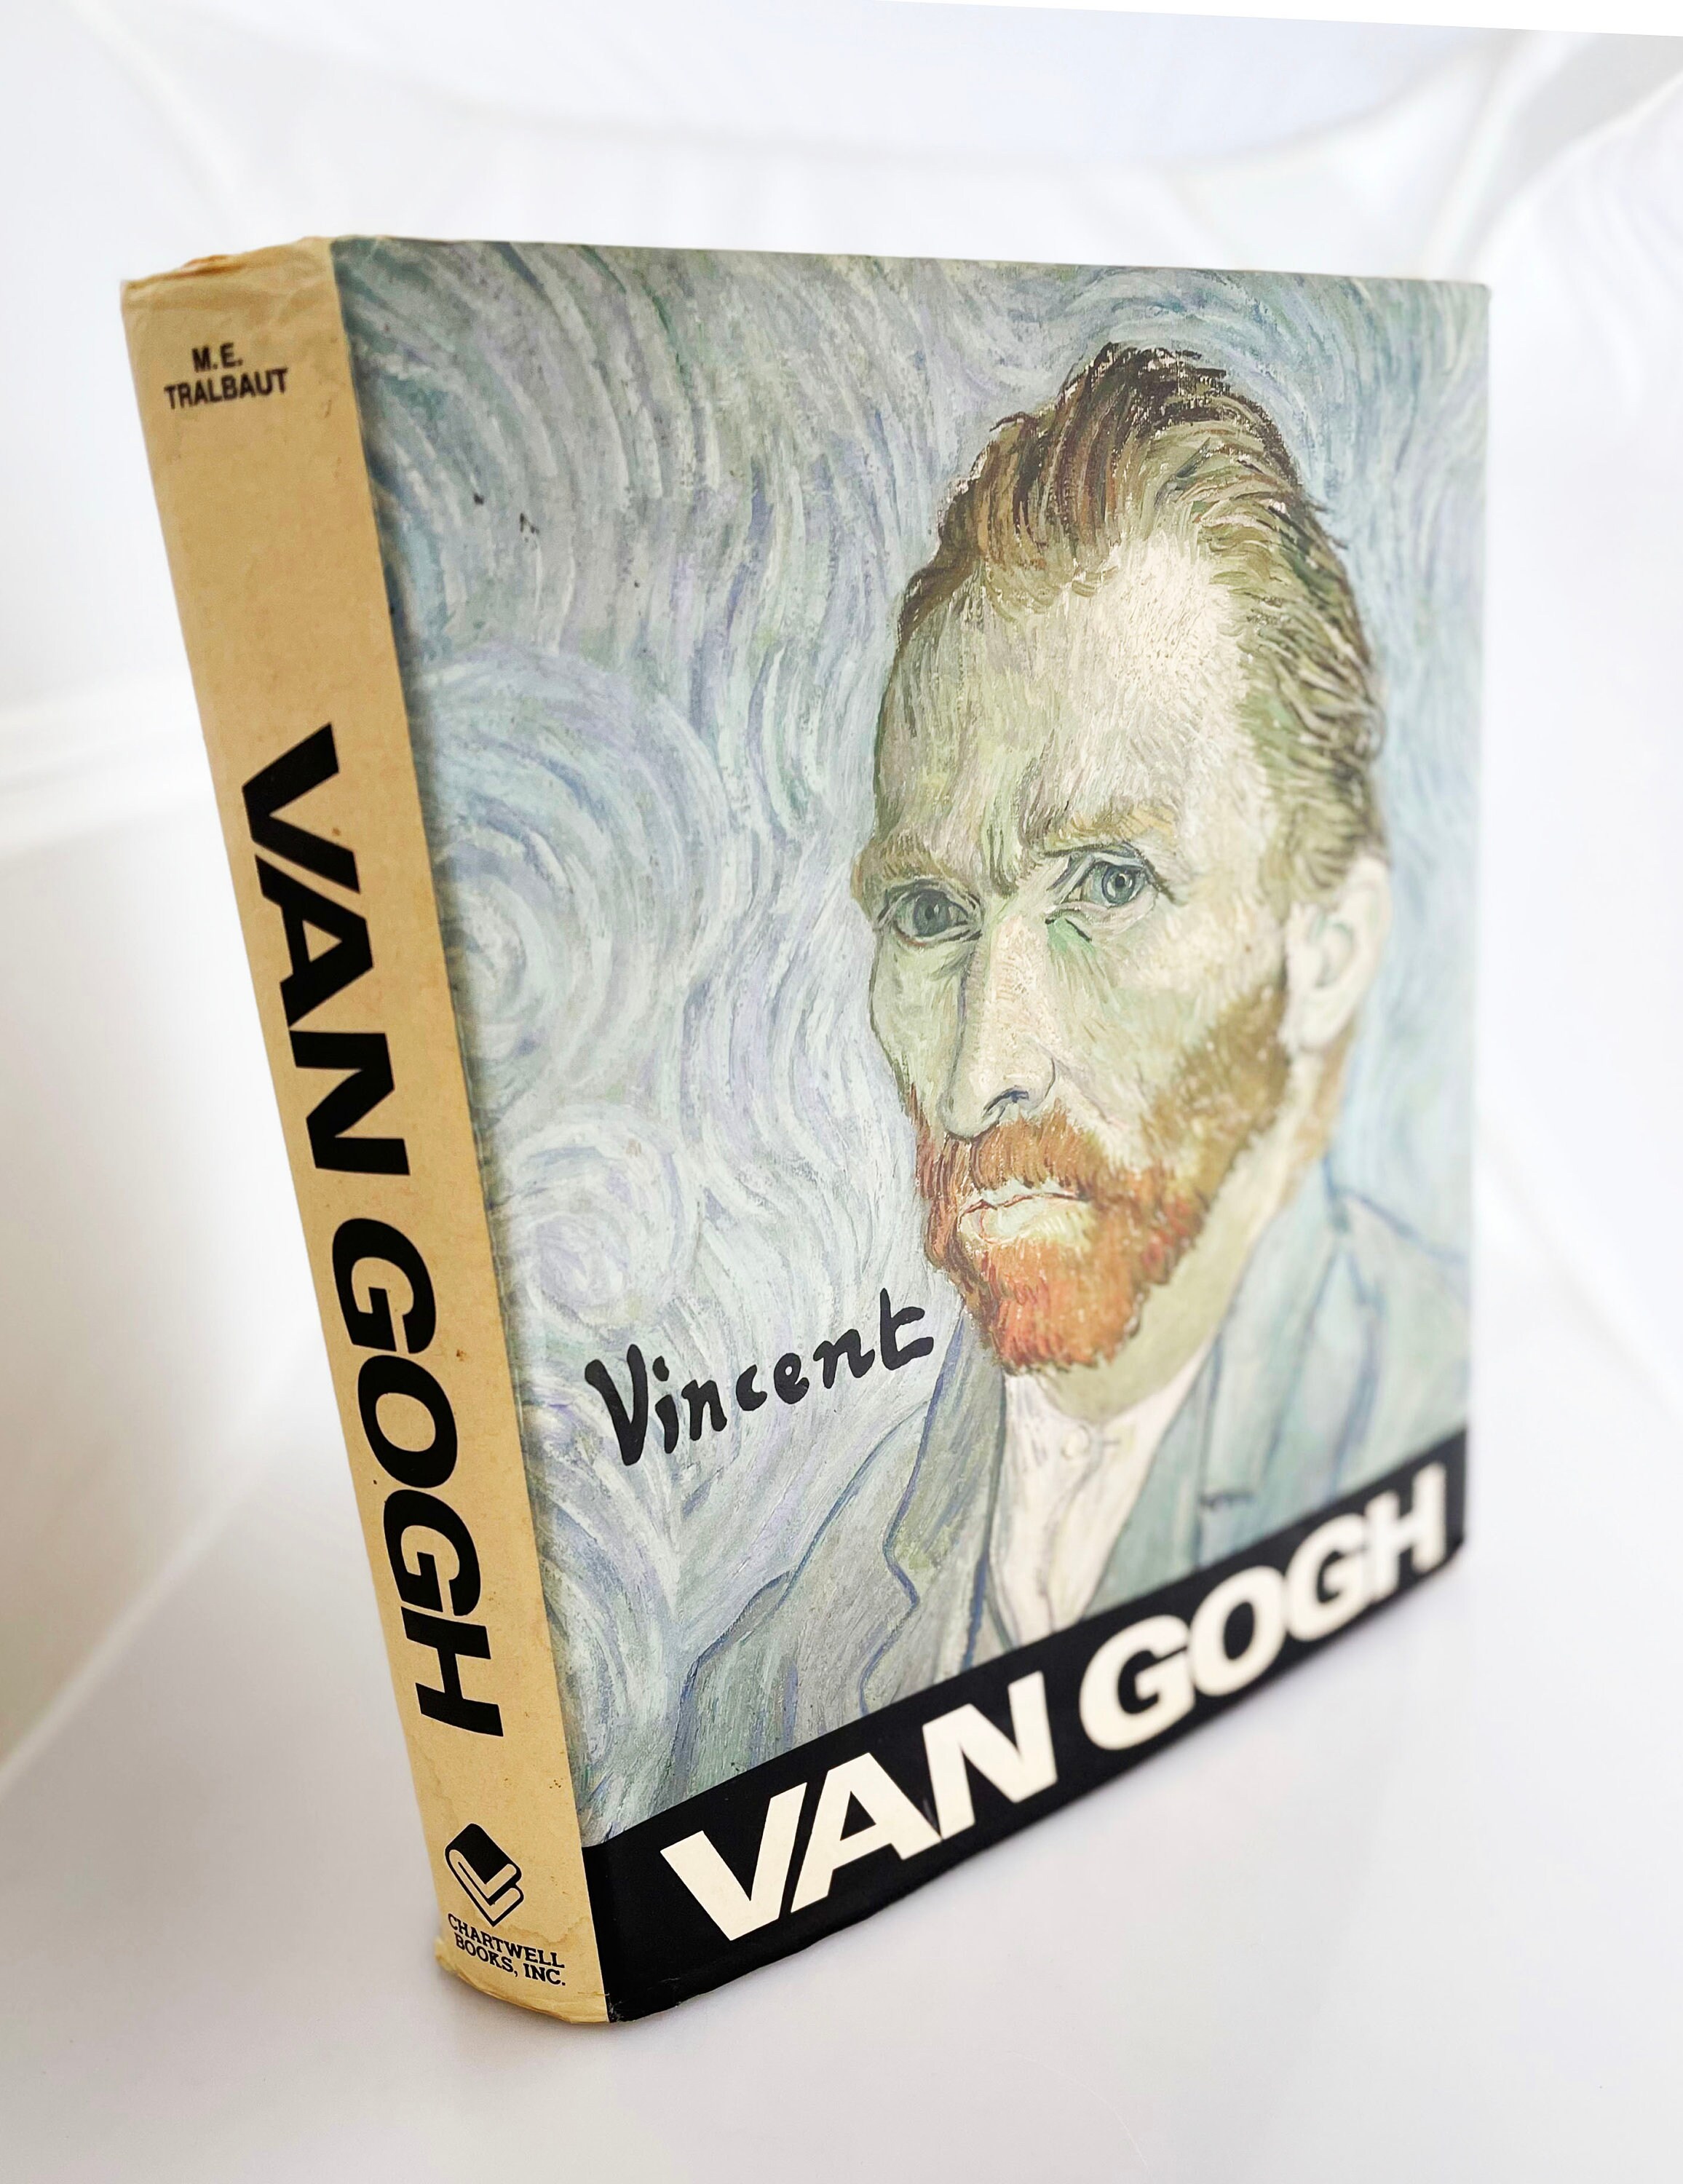 The Starry Night, Sketchbook, Hardcover Journal, Vintage Painting, Vincent  Van Gogh, 1889, Notebook 